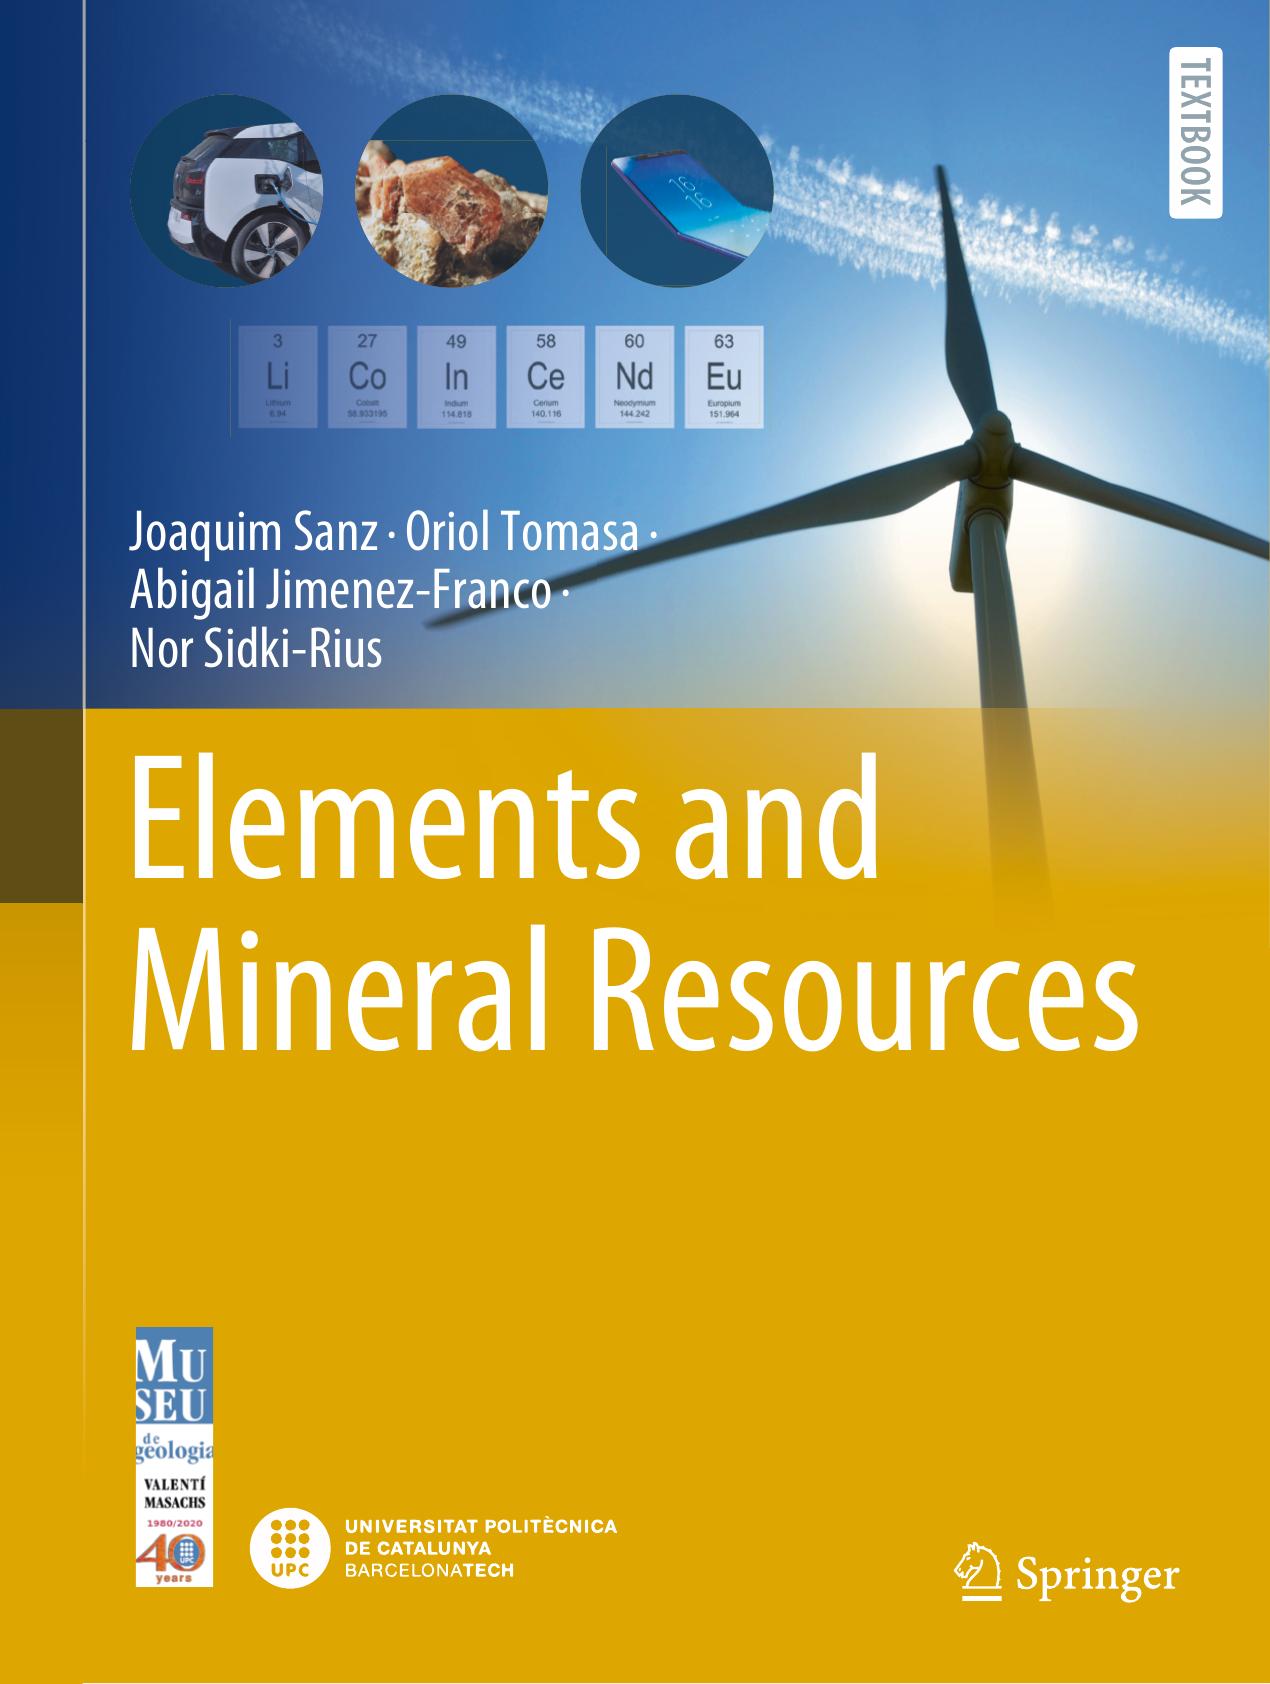 Elements and Mineral Resources by Joaquim Sanz Oriol Tomasa Abigail Jimenez-Franco Nor Sidki-Rius